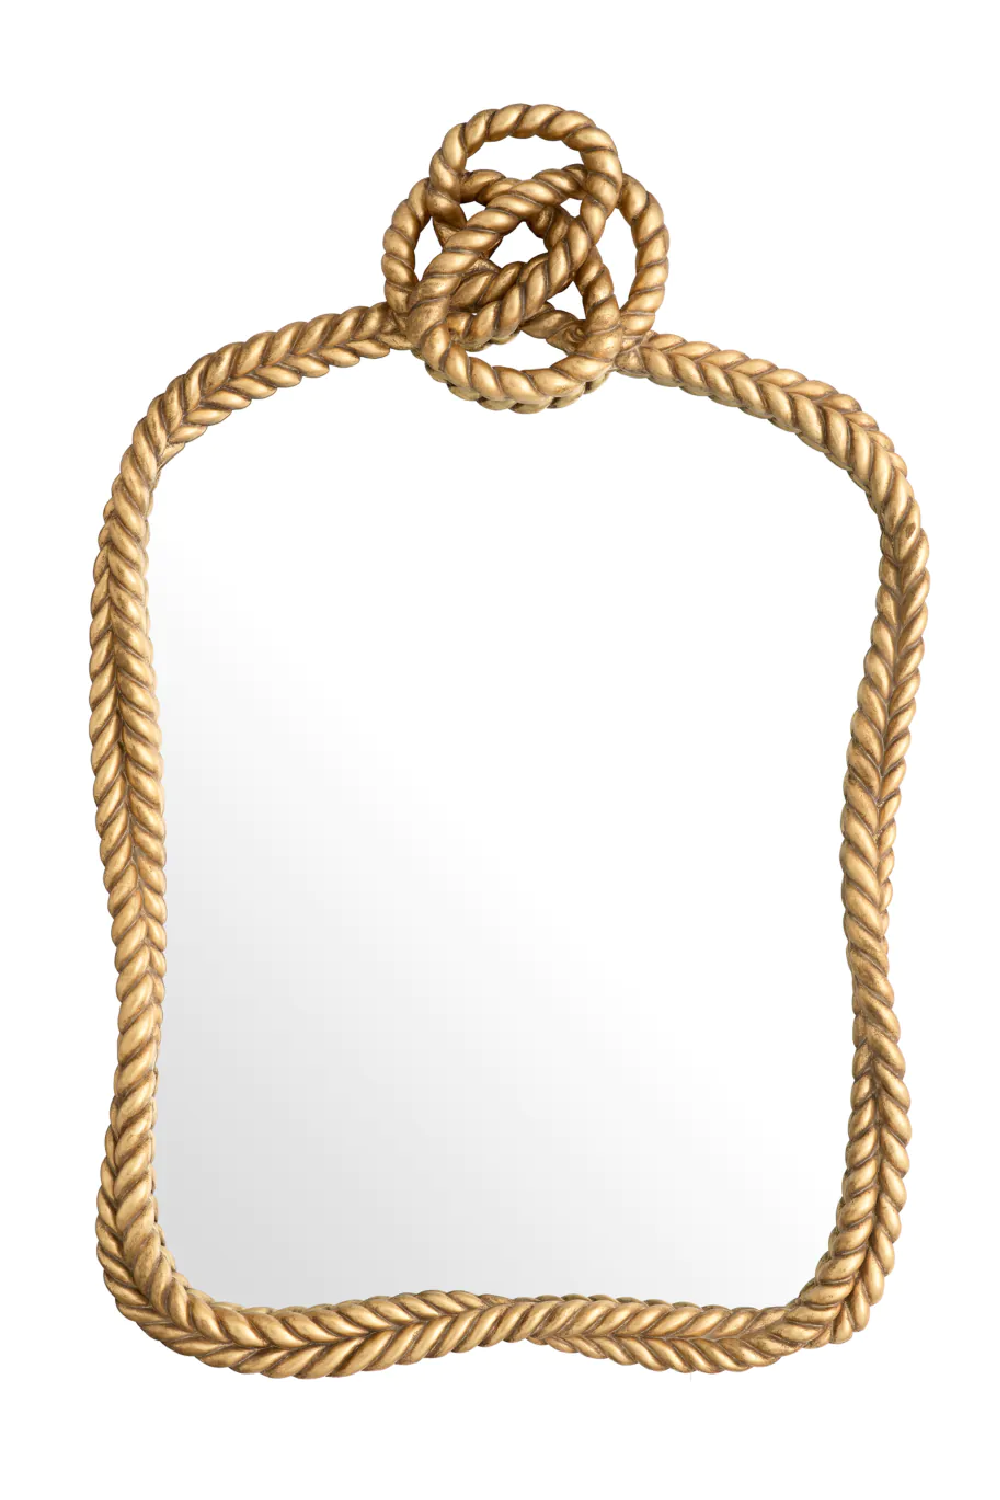 Mahogany Rope Detail Mirror | Eichholtz Vincenso | Oroa.com